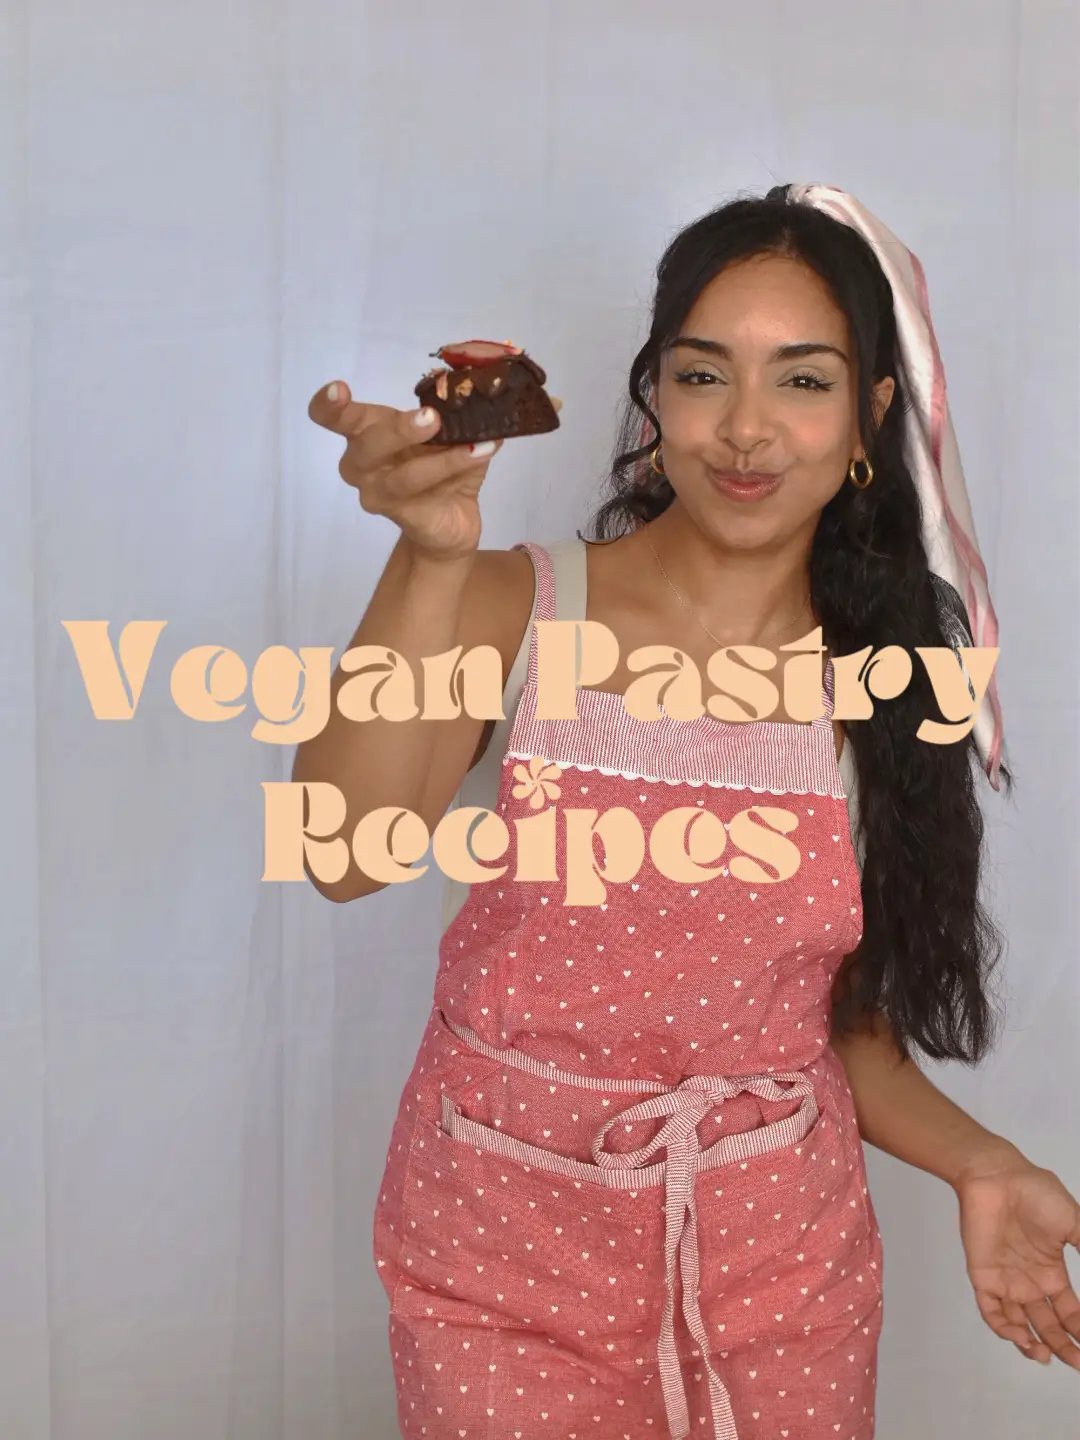 Hi everyone! I’m a vegan pastry chef's images